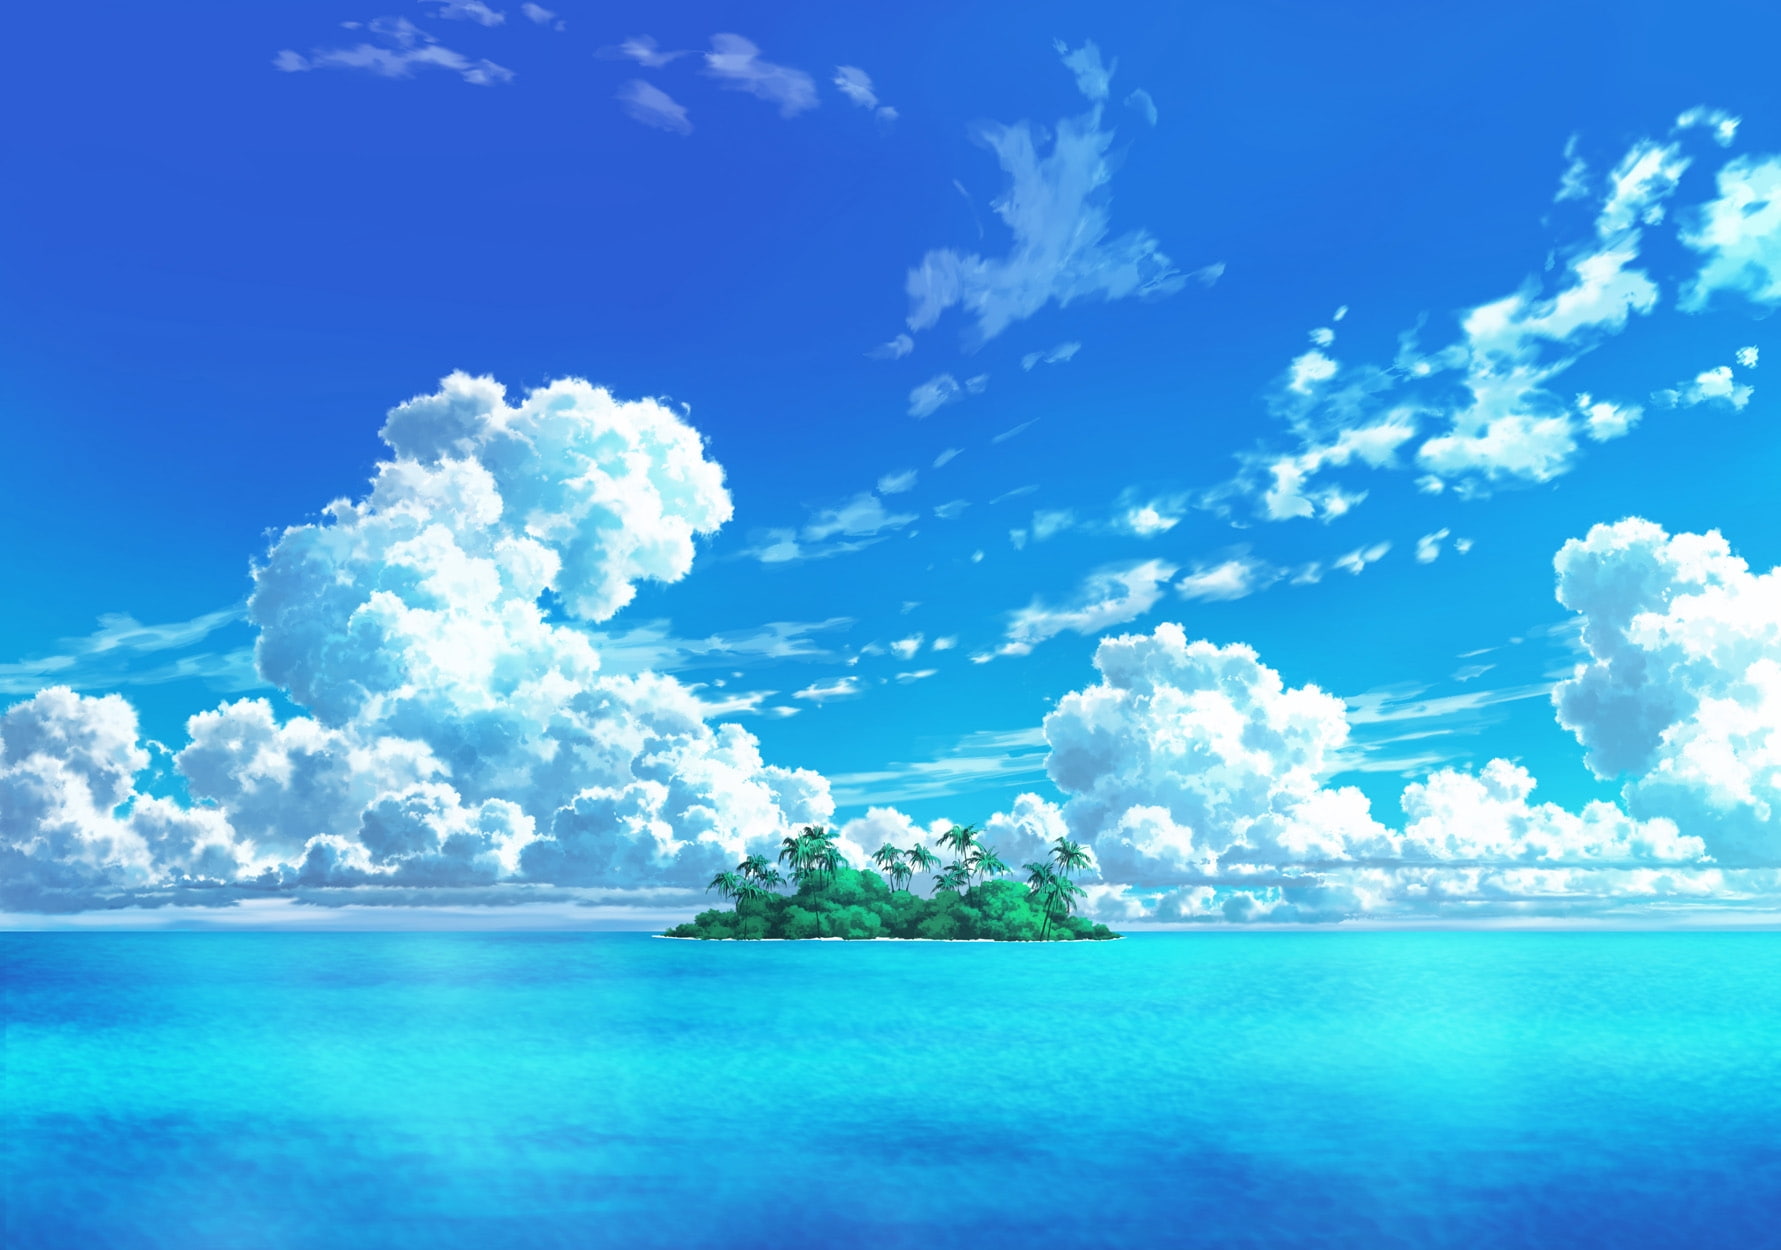 anime island, ocean, clouds, sky, cloud - sky, blue, beauty in nature